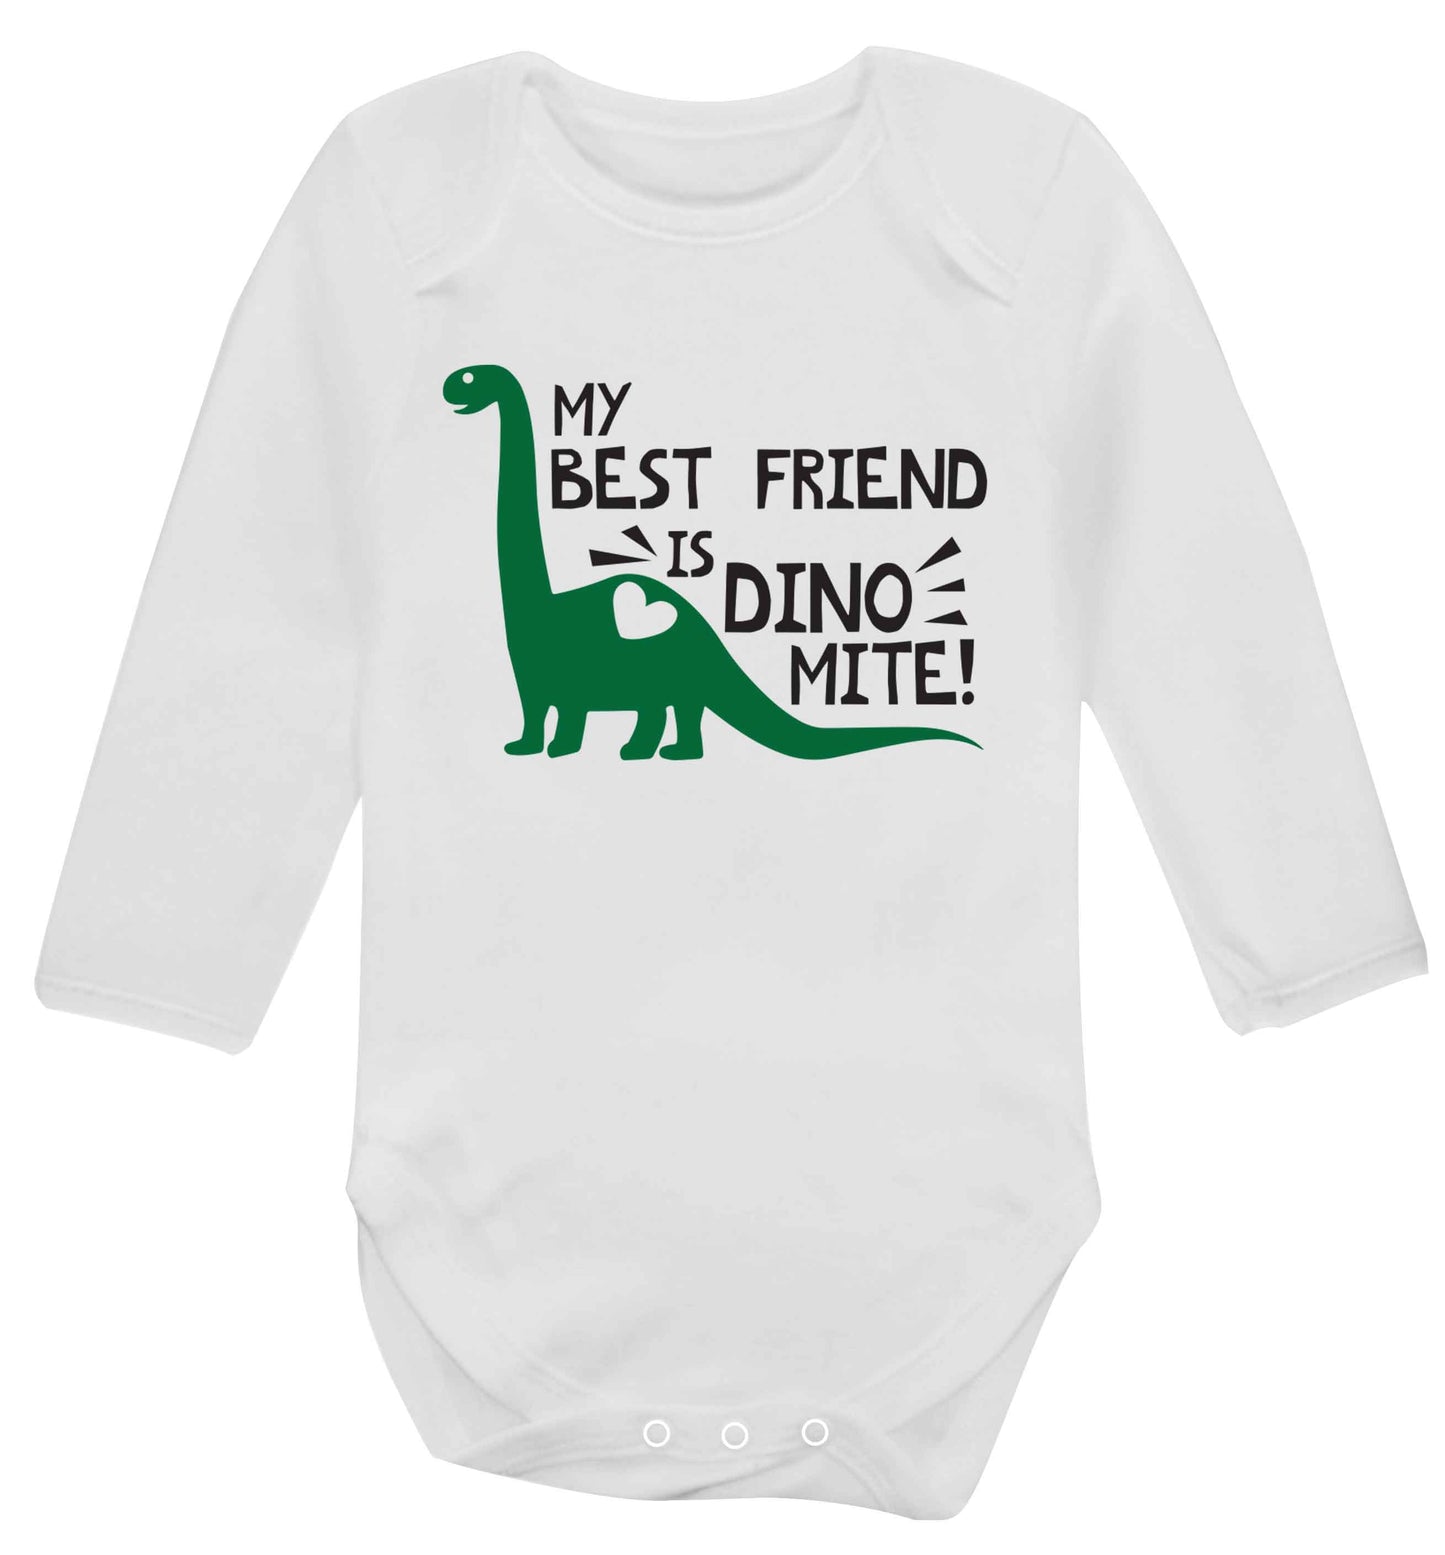 My best friend is dinomite! Baby Vest long sleeved white 6-12 months